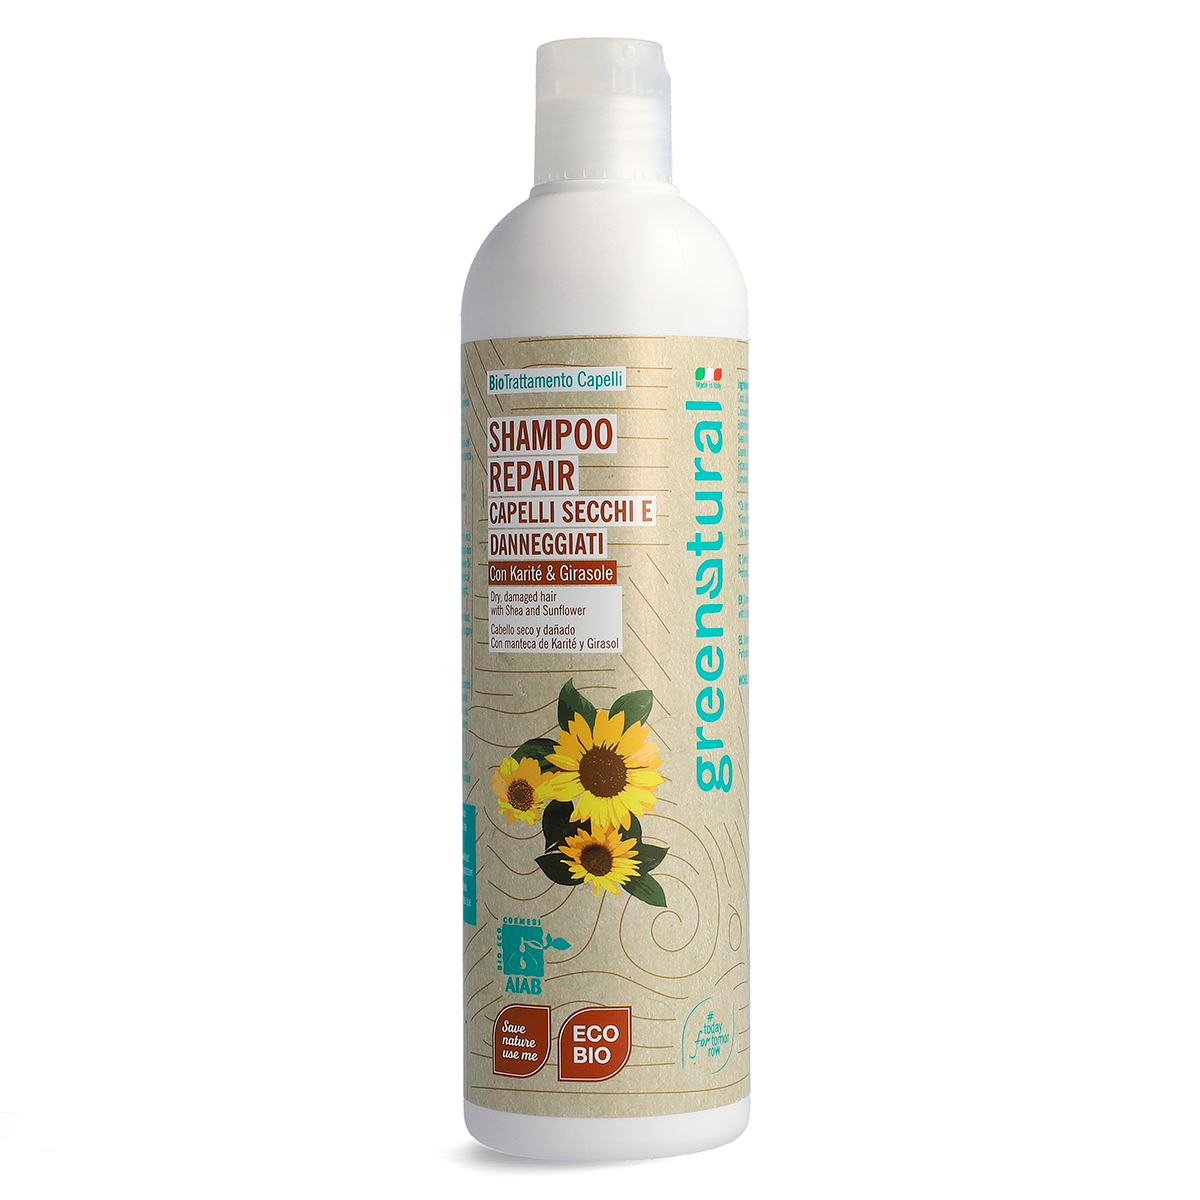 Sheabutter BIO Shampoo - REPAIR - öko und bio – 400ml